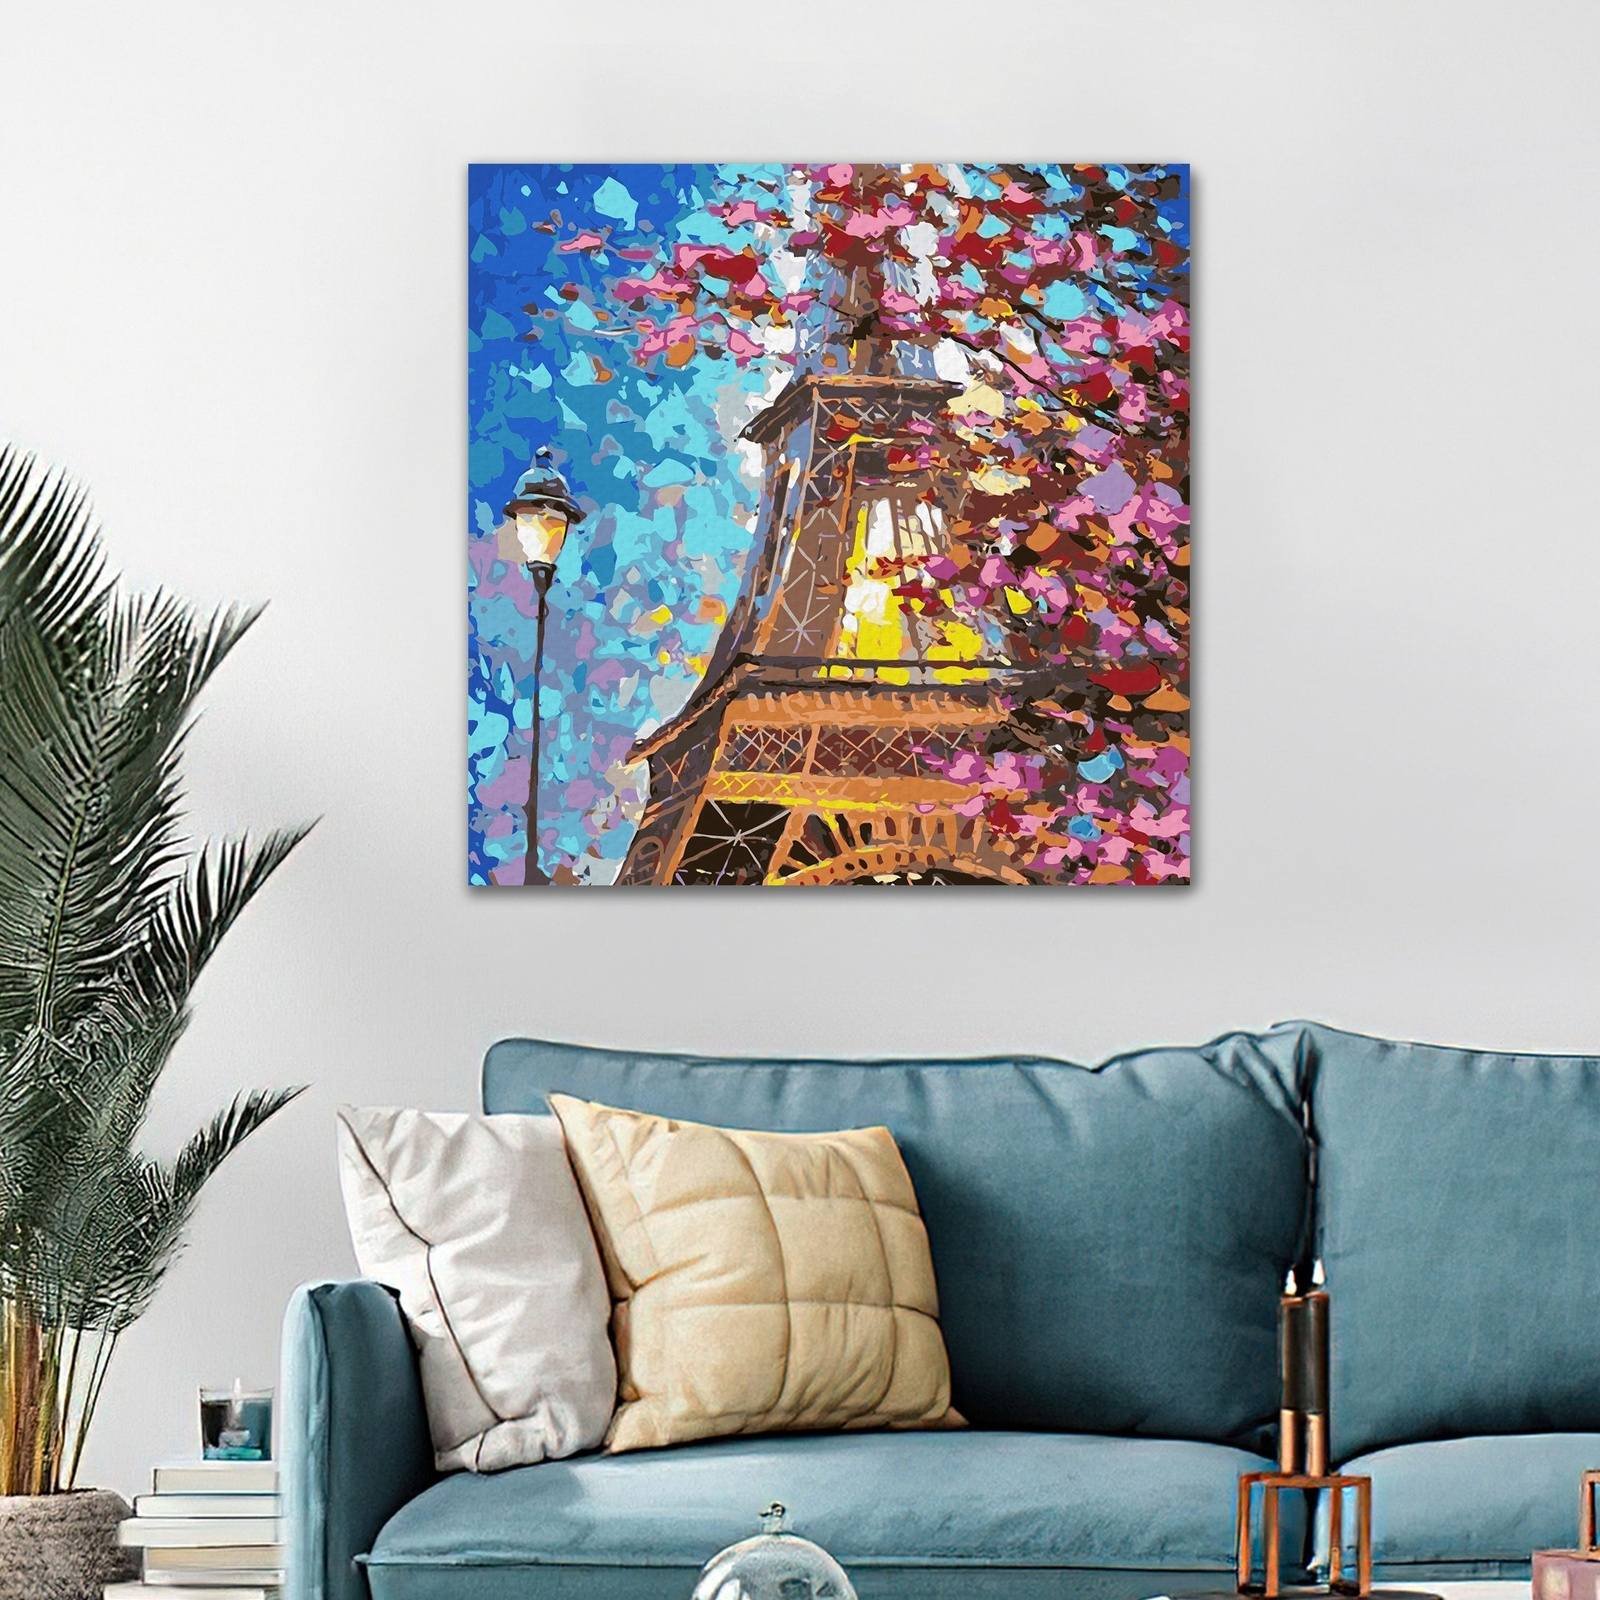 Paris, Eiffeltornet (PC0602)